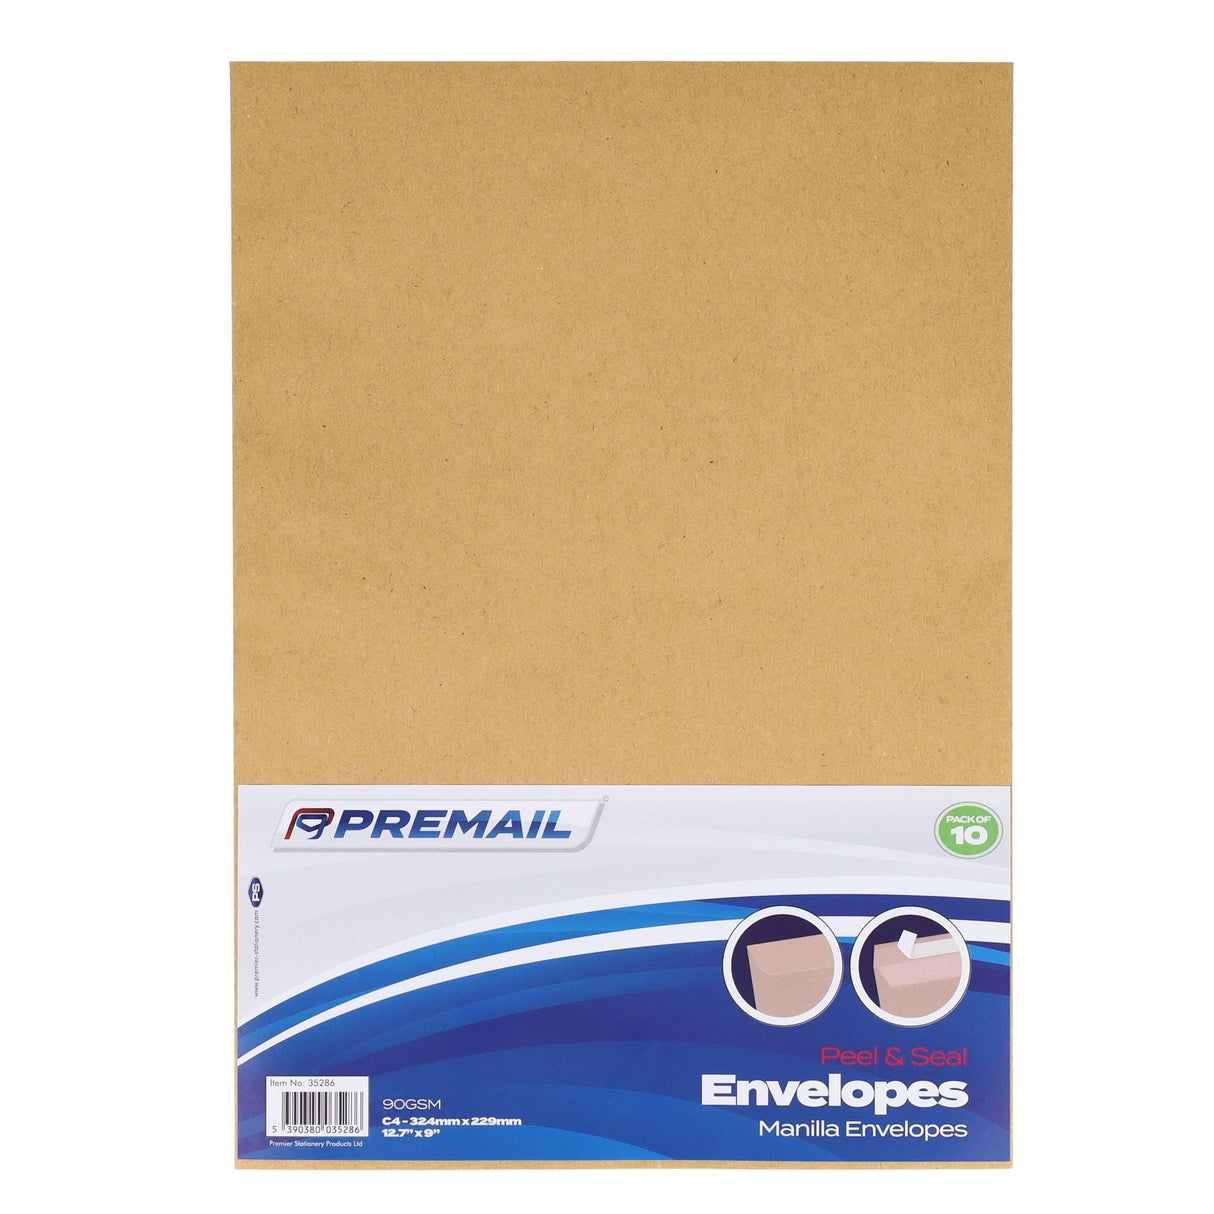 Premail C4 Envelopes - 324 x 229mm - Manilla - Pack of 10-Envelopes-Premail|StationeryShop.co.uk